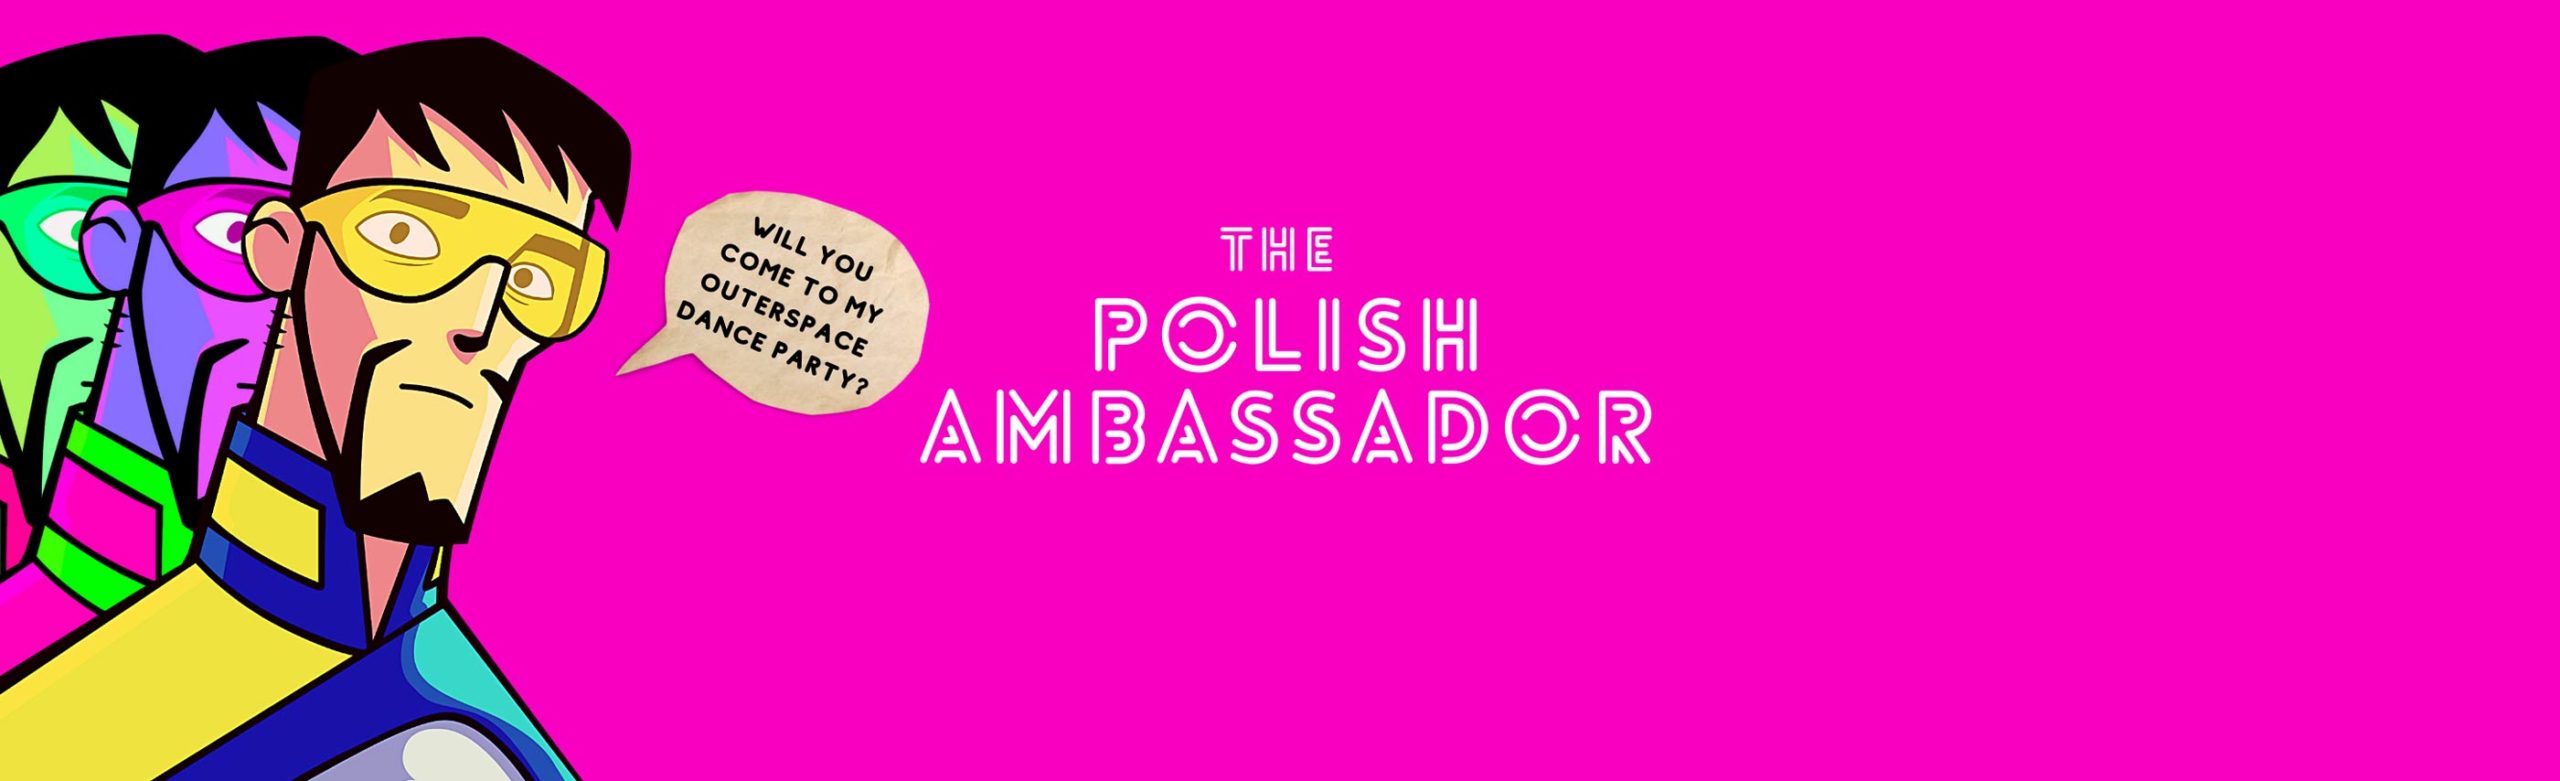 The Polish Ambassador Tickets Giveaway 2022 Image